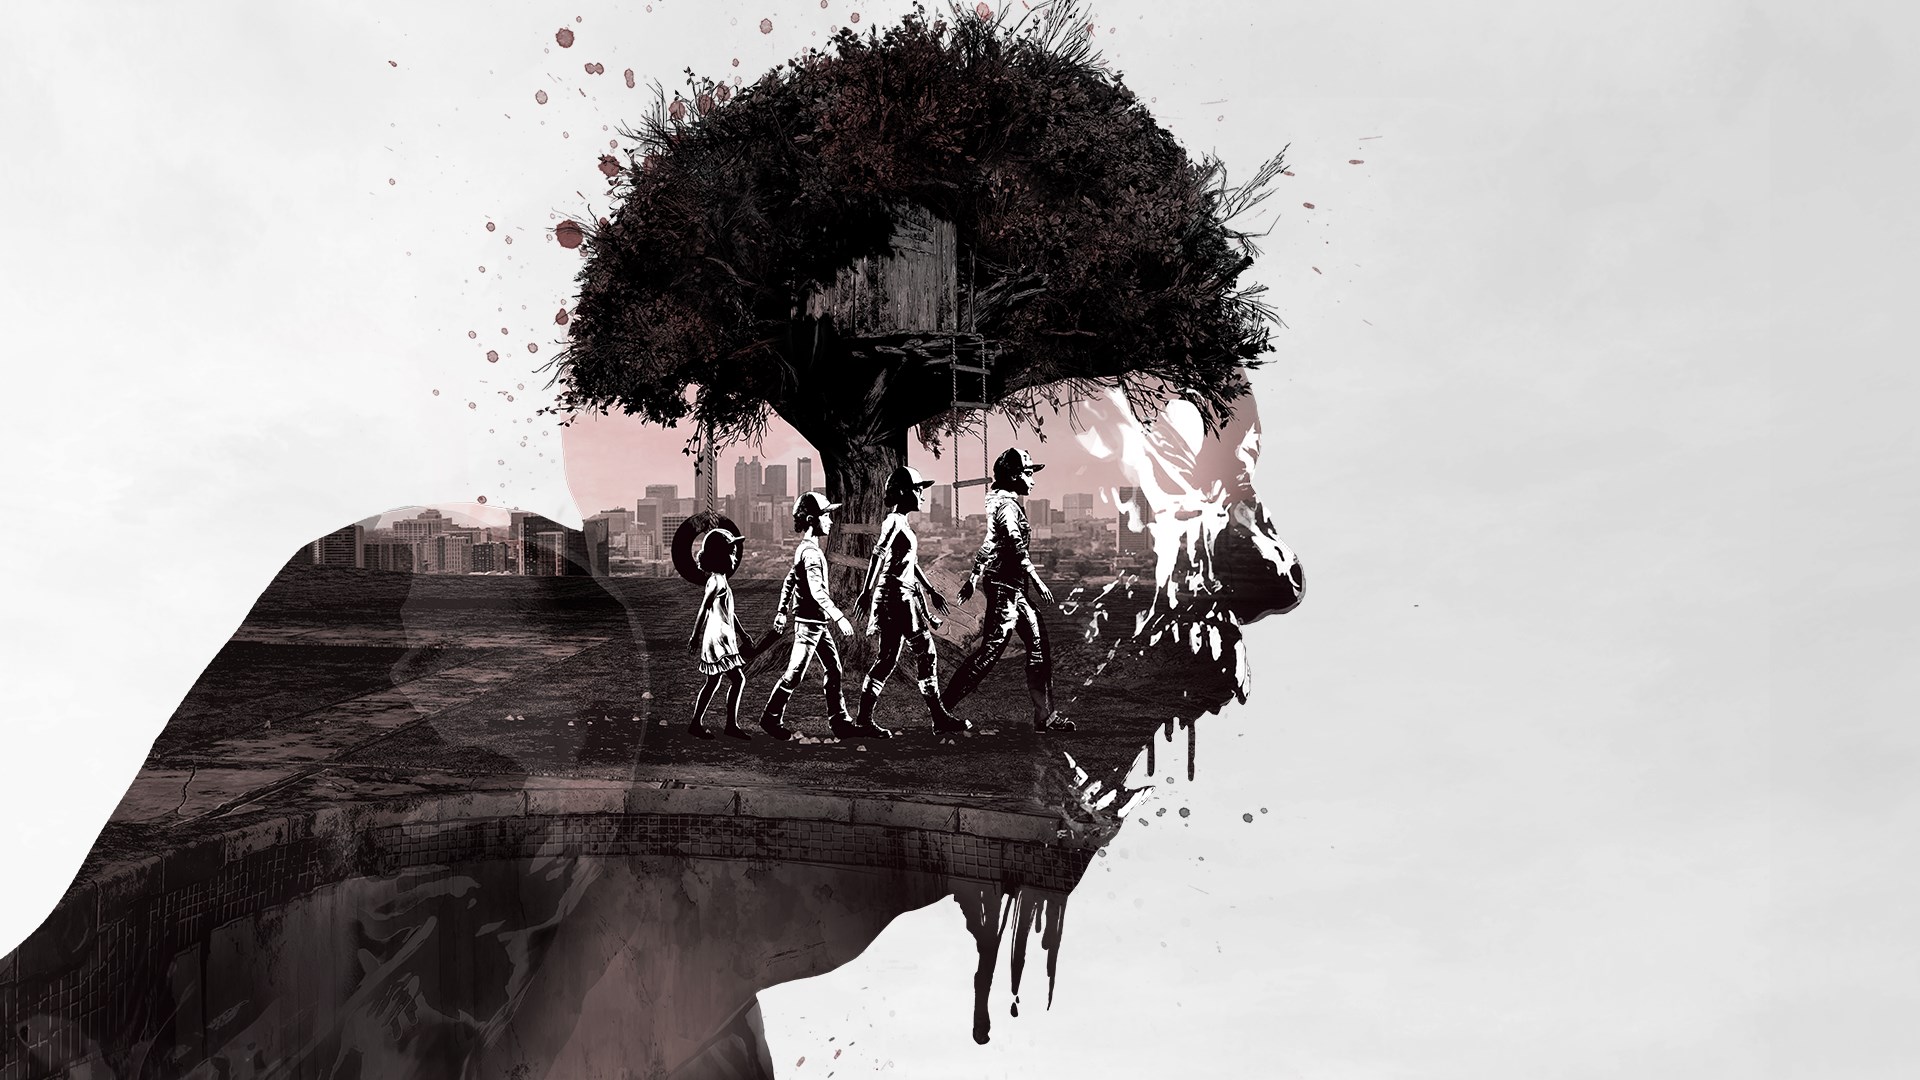 The Walking Dead: The Telltale Definitive Series Steam